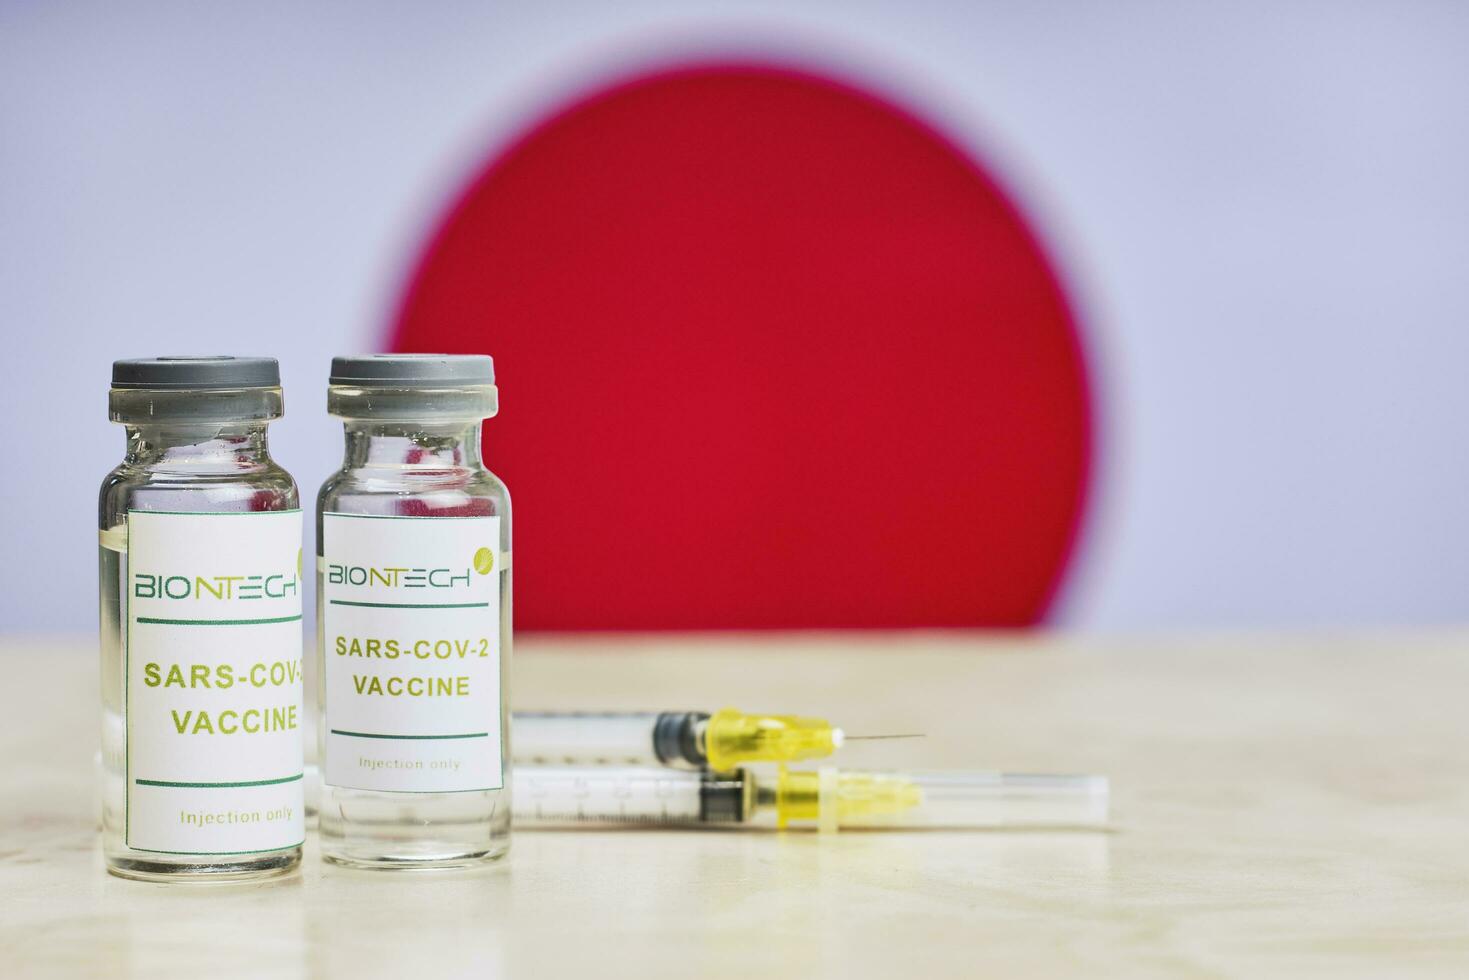 BioNTech Covid-19 vaccine trials. Japan government rollout mass immunization against coronavirus photo